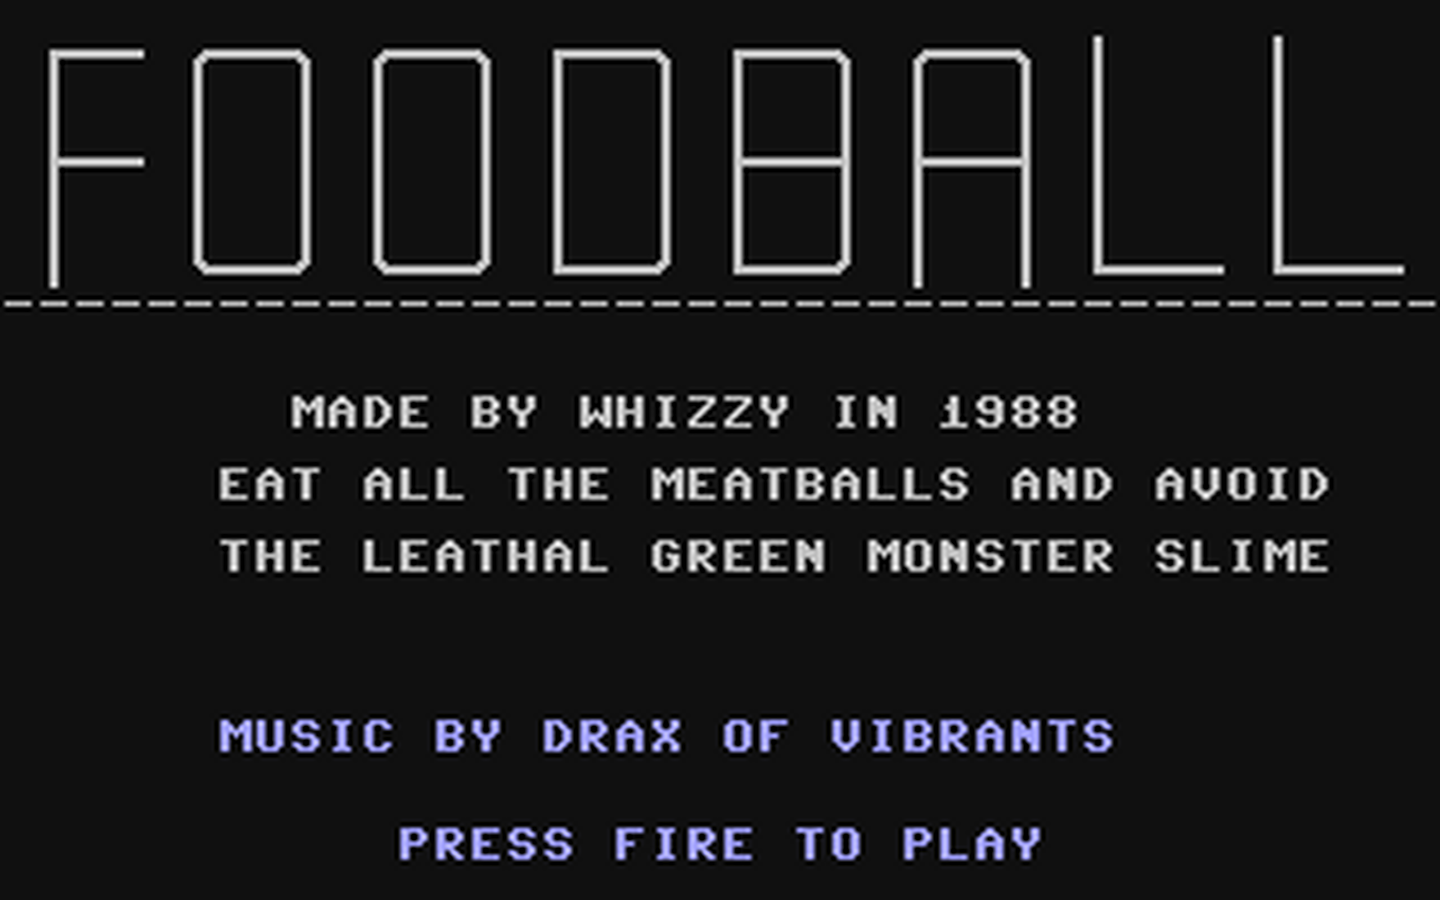 C64 GameBase Foodball (Public_Domain) 2018